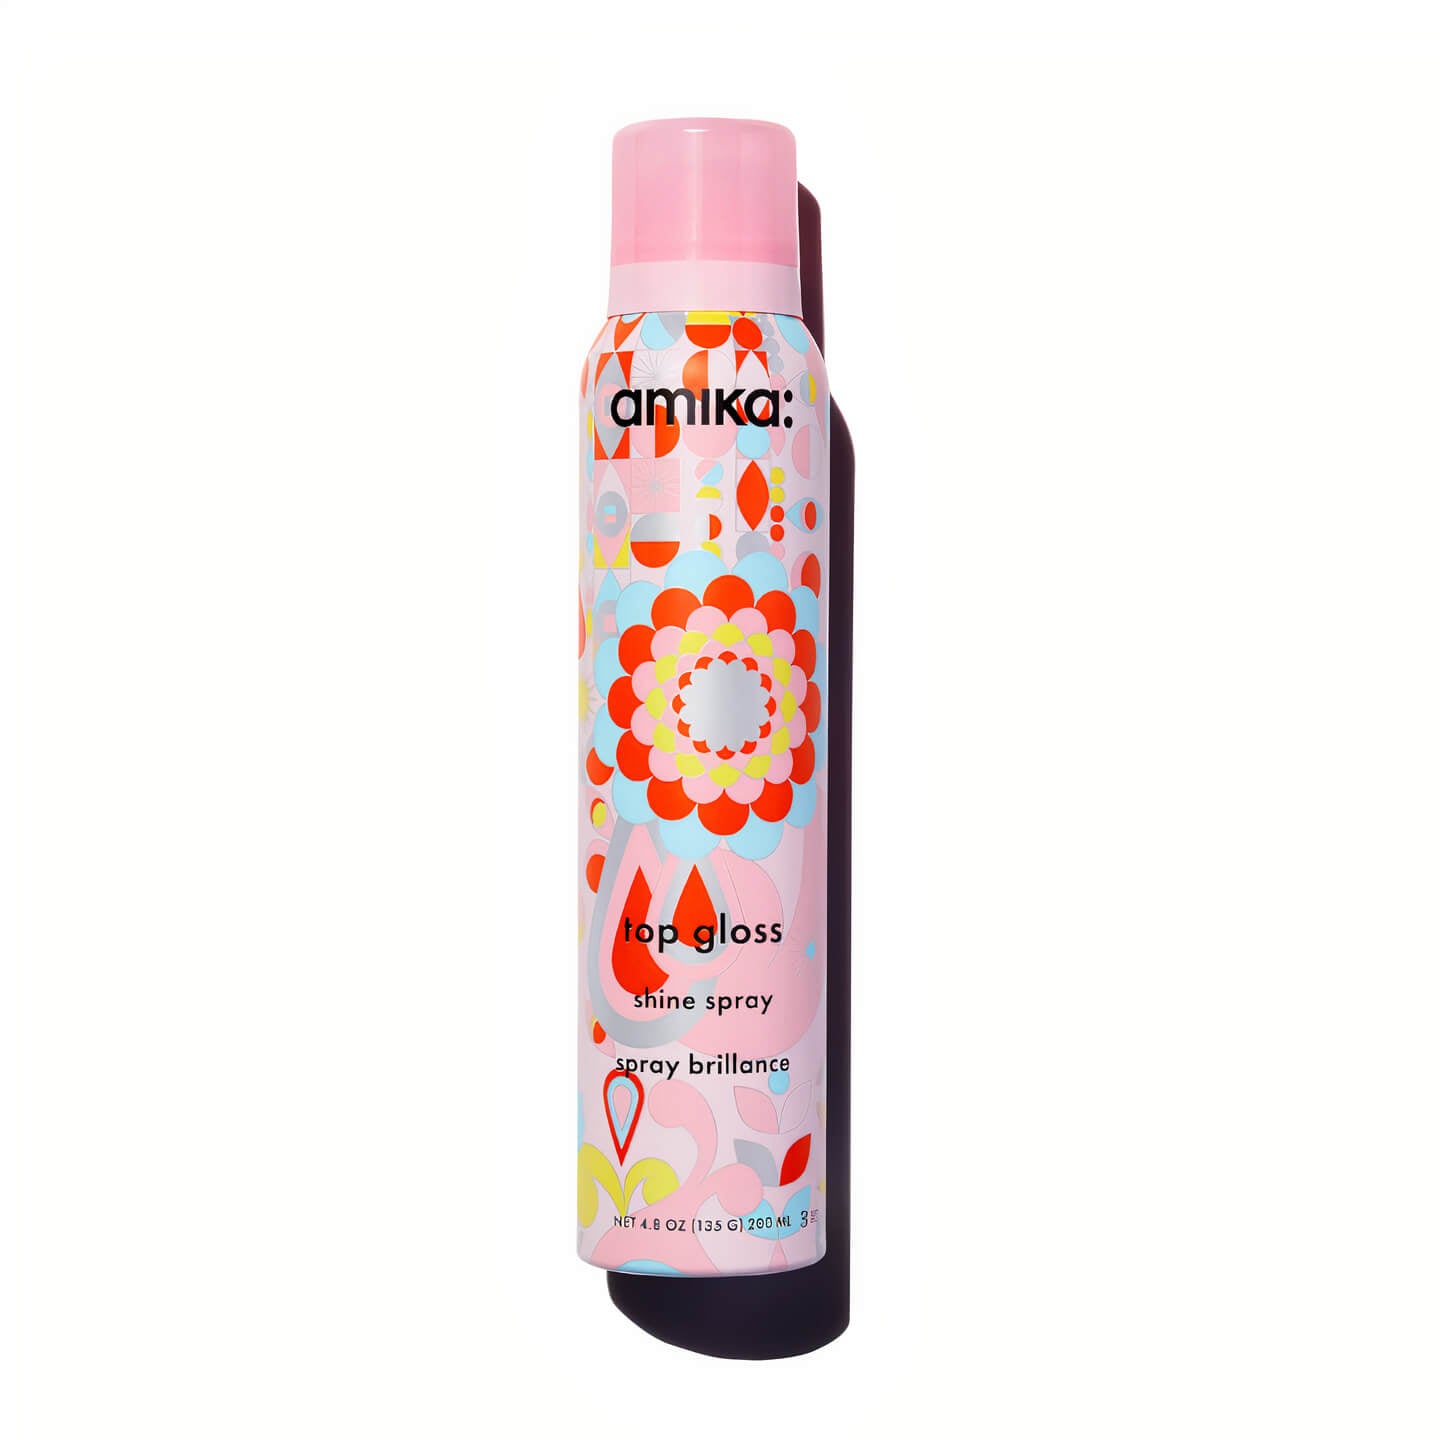 Amika: Top Gloss Shine Spray